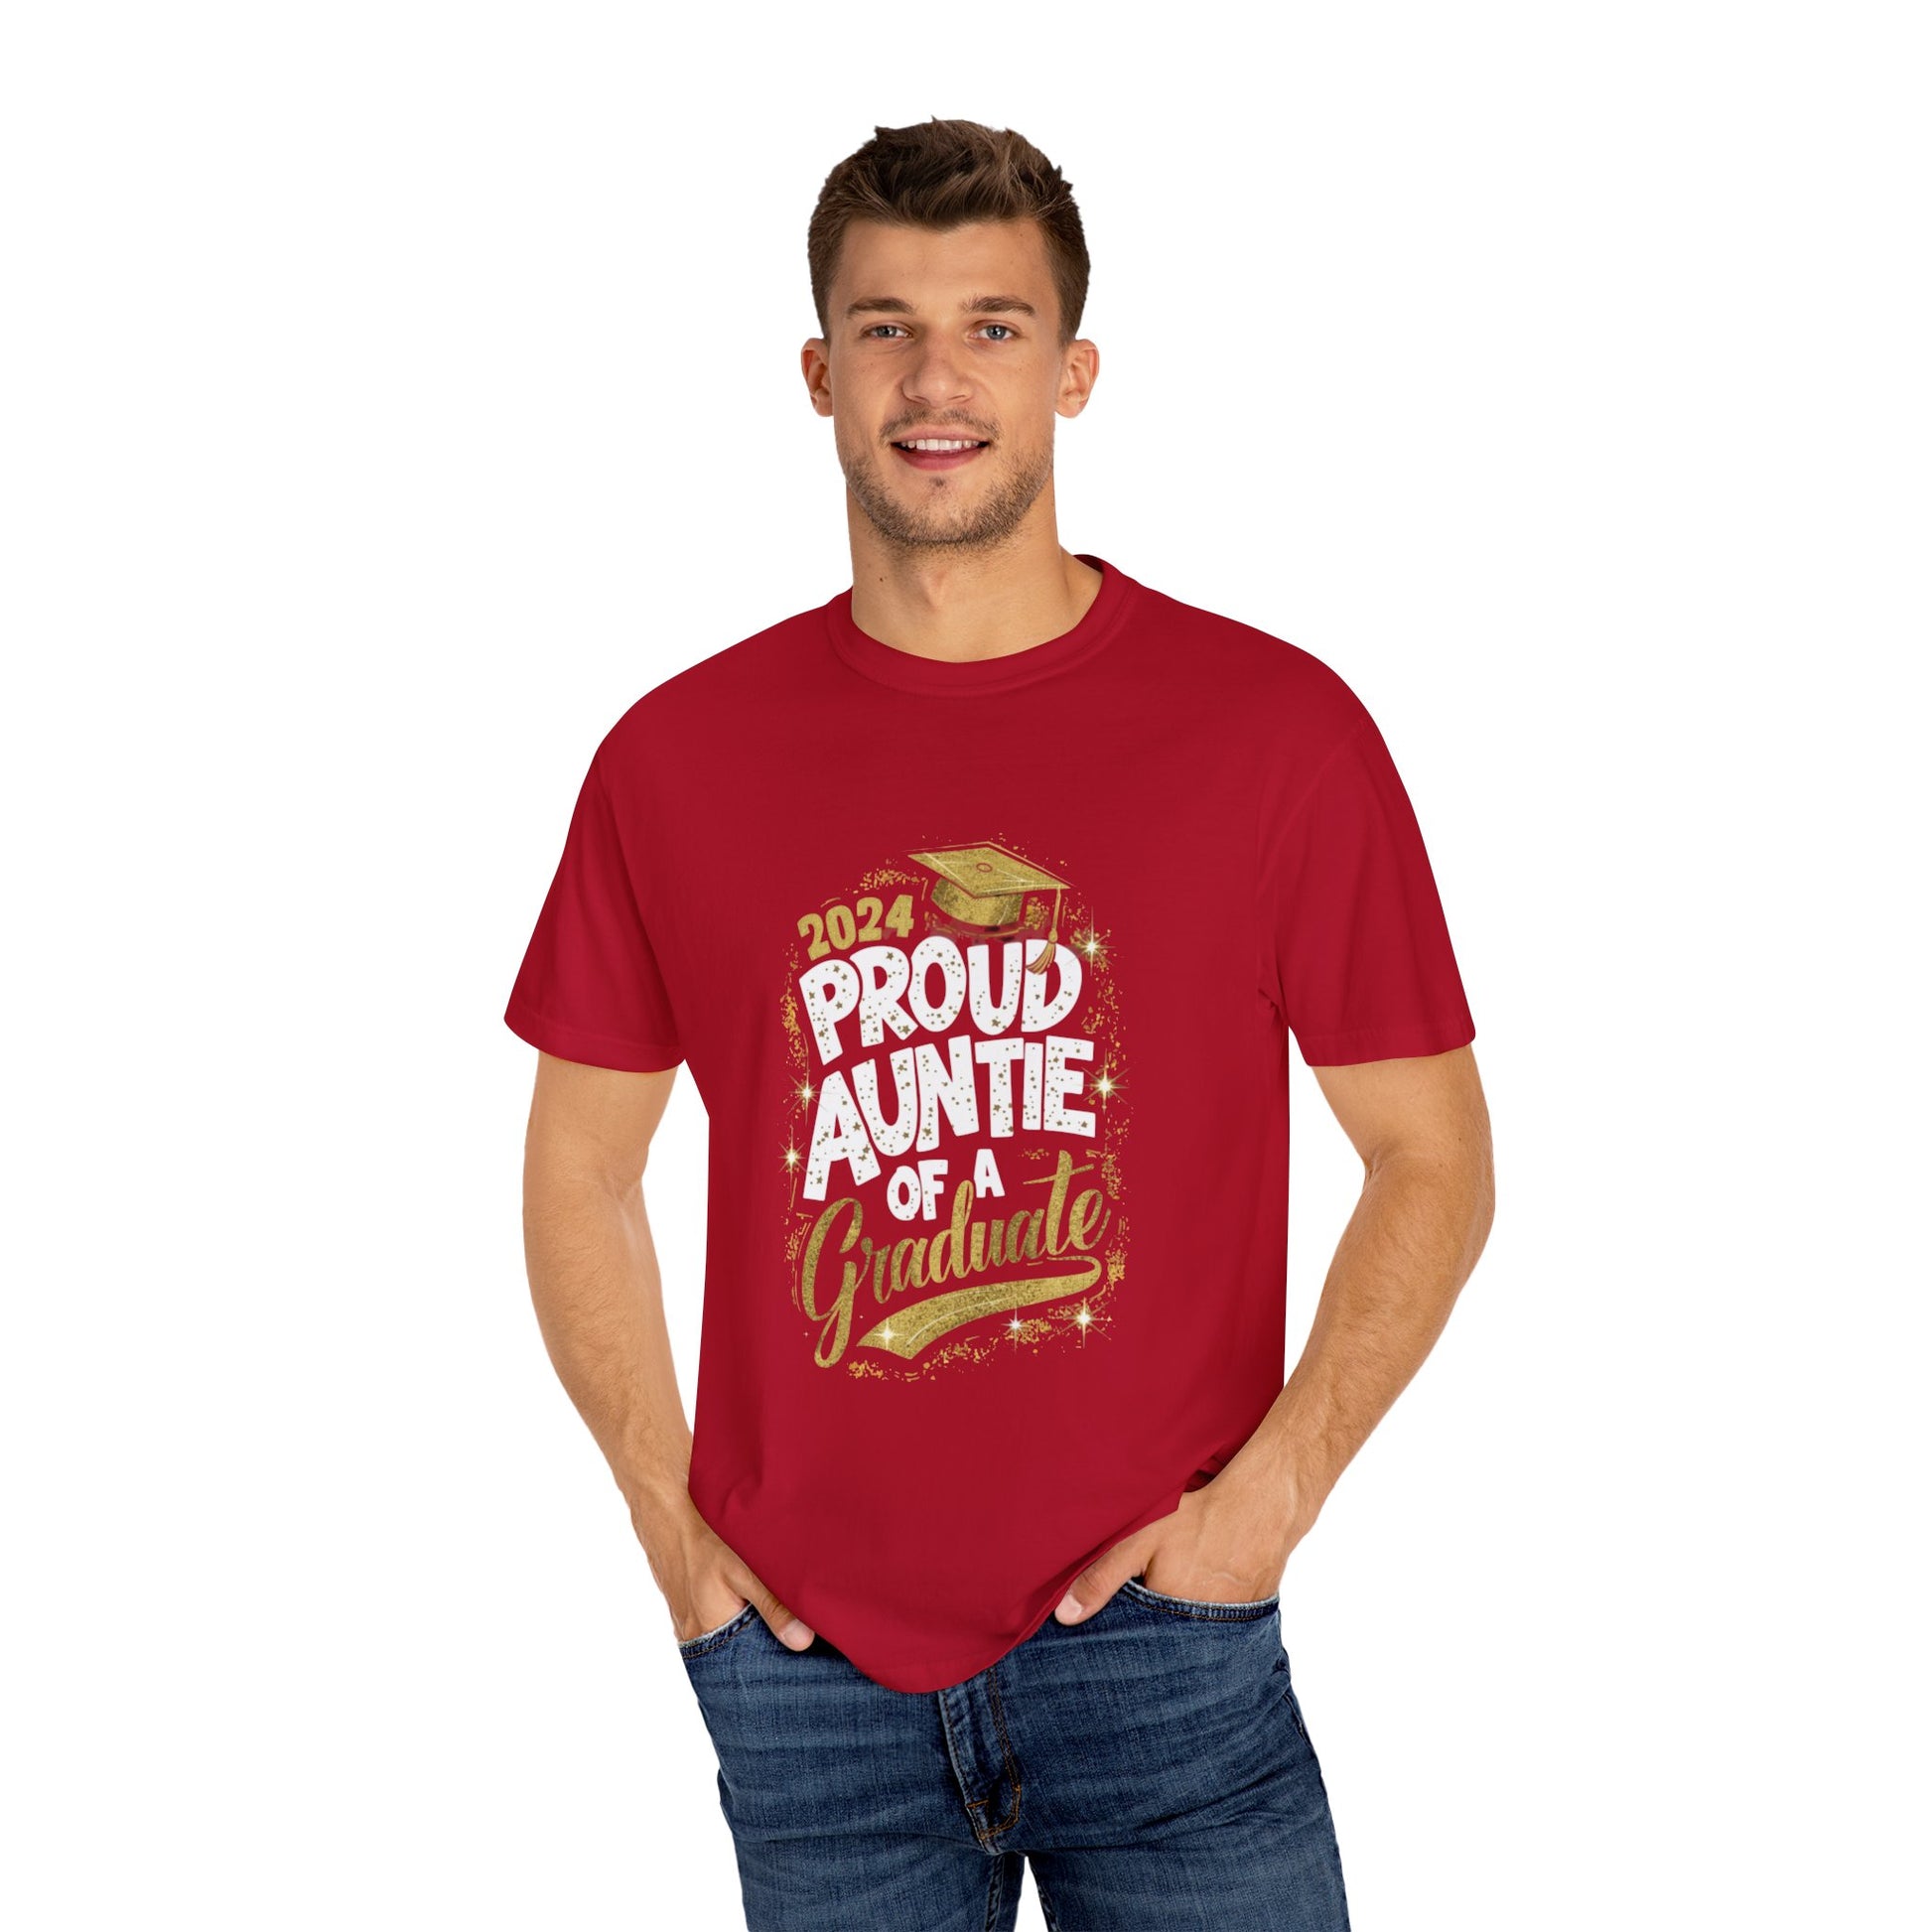 Proud Auntie of a 2024 Graduate Unisex Garment-dyed T-shirt Cotton Funny Humorous Graphic Soft Premium Unisex Men Women Red T-shirt Birthday Gift-21